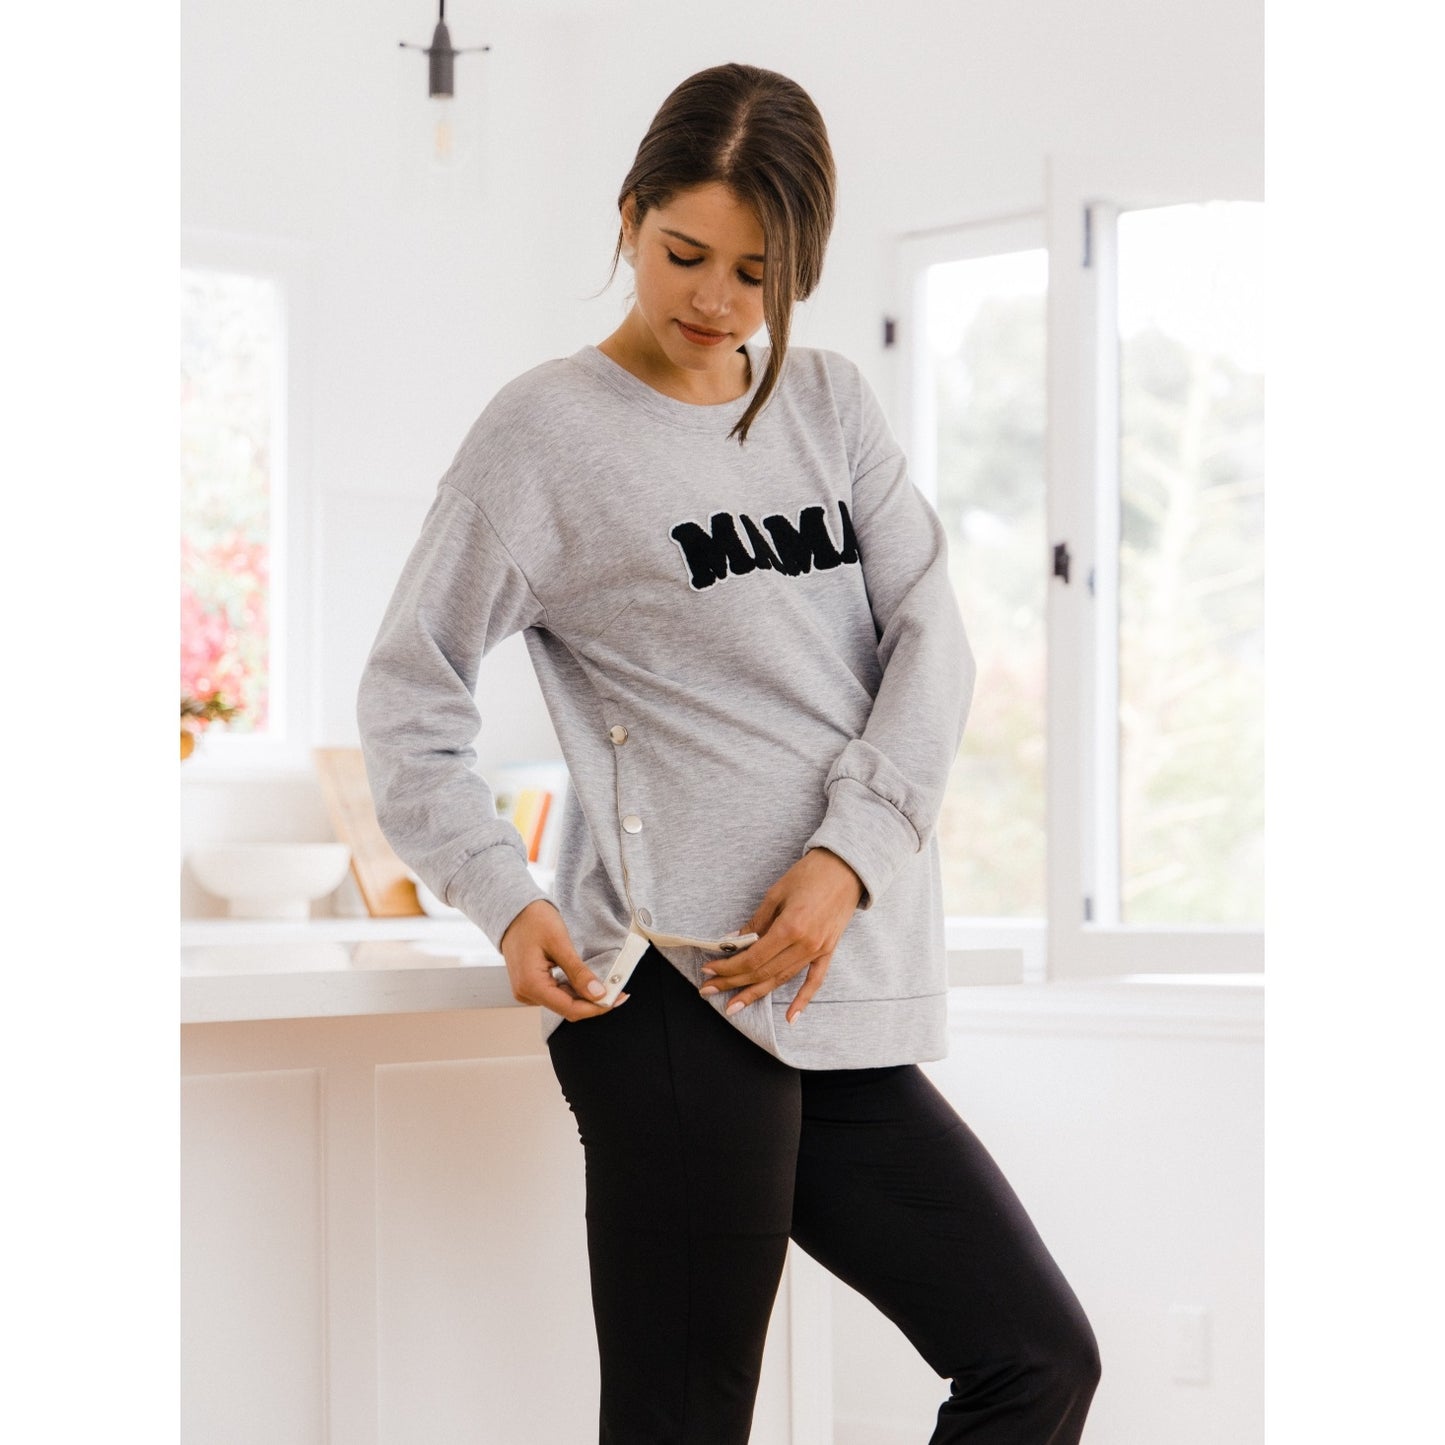 Mama Maternity + Nursing Sweater